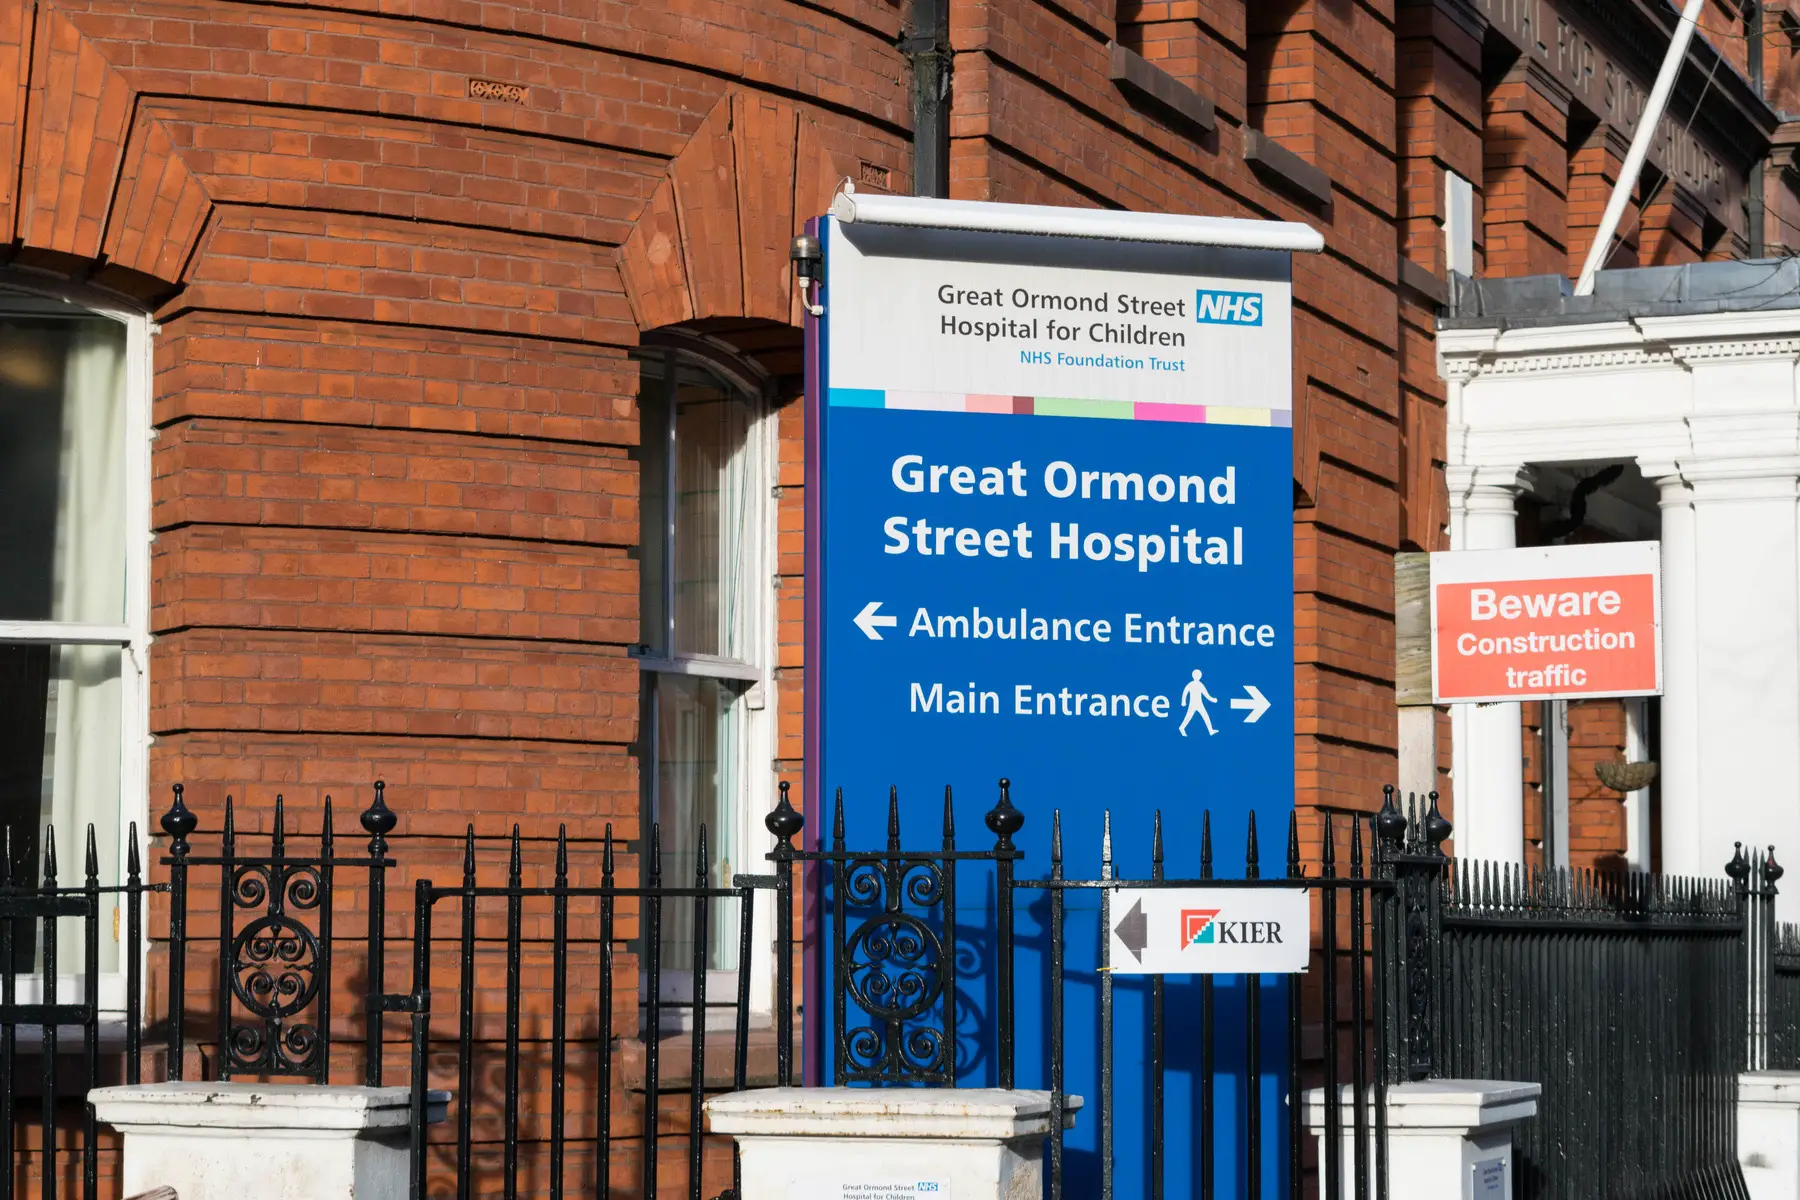 Great Ormond Street Hospital for Children in London